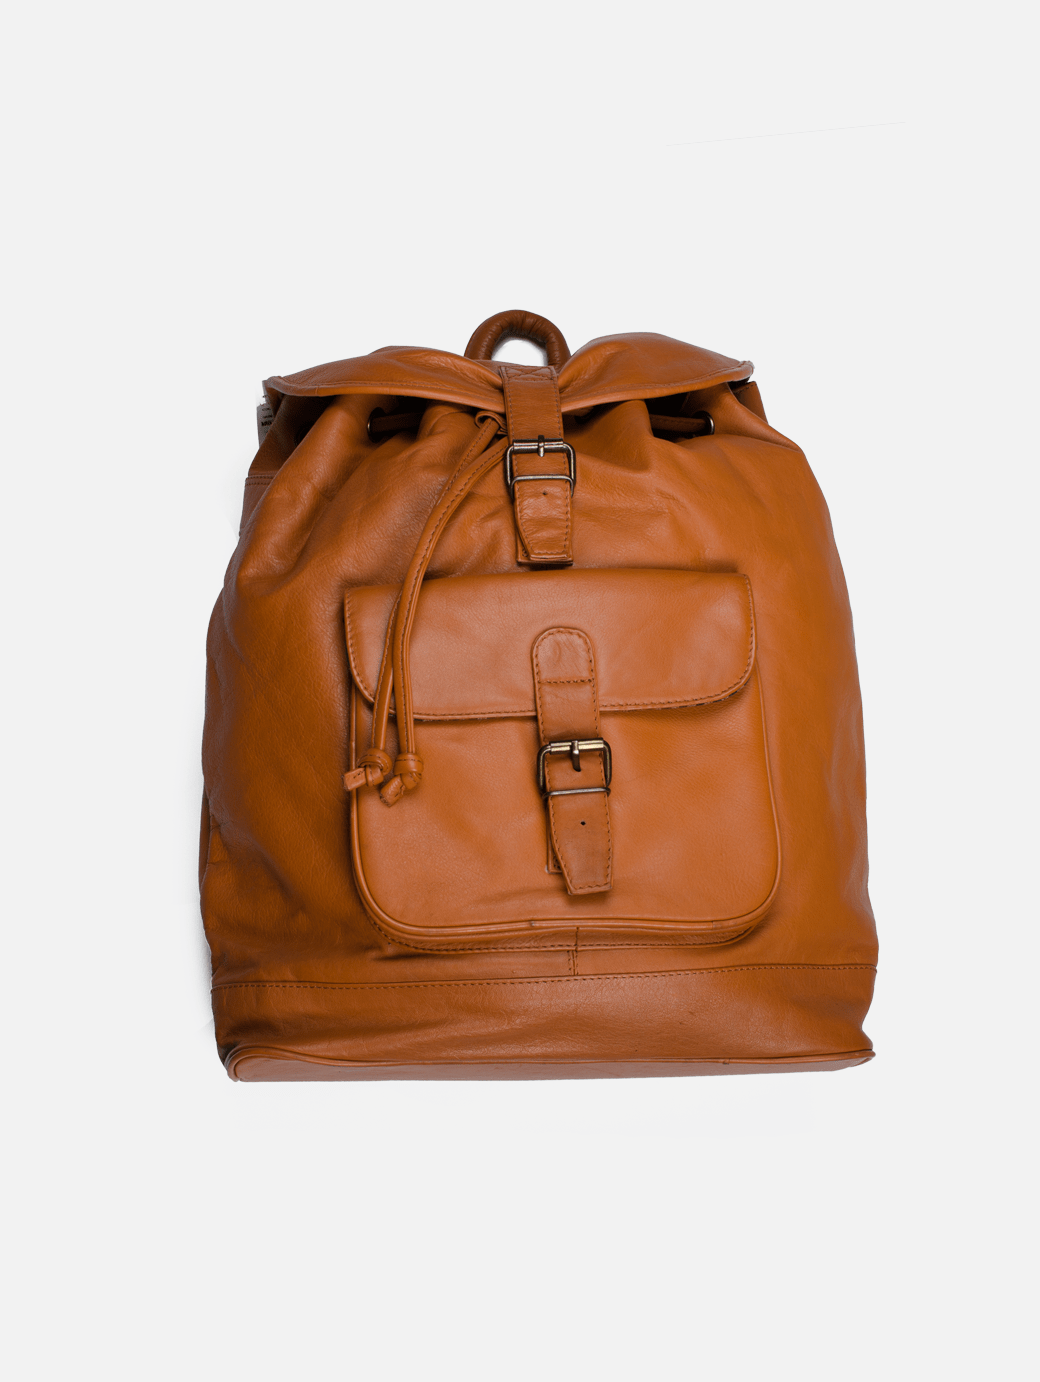 Leather Backpack | MABU Leathers